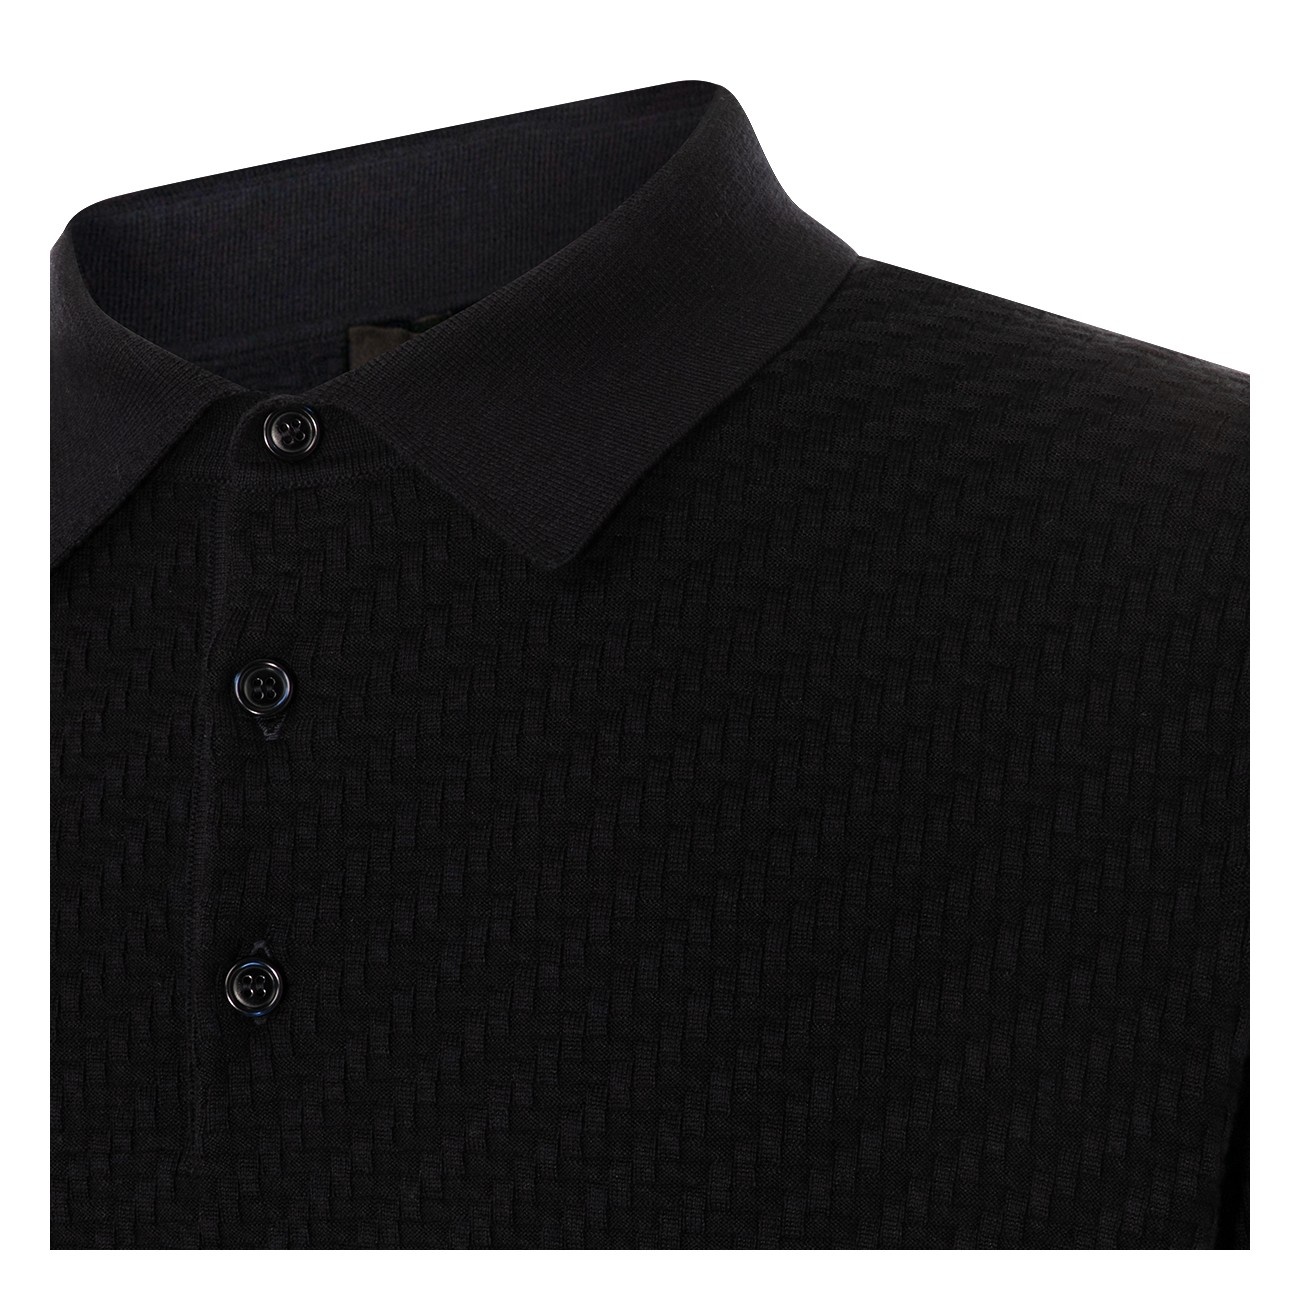 navy blue cotton blend polo shirt - 3